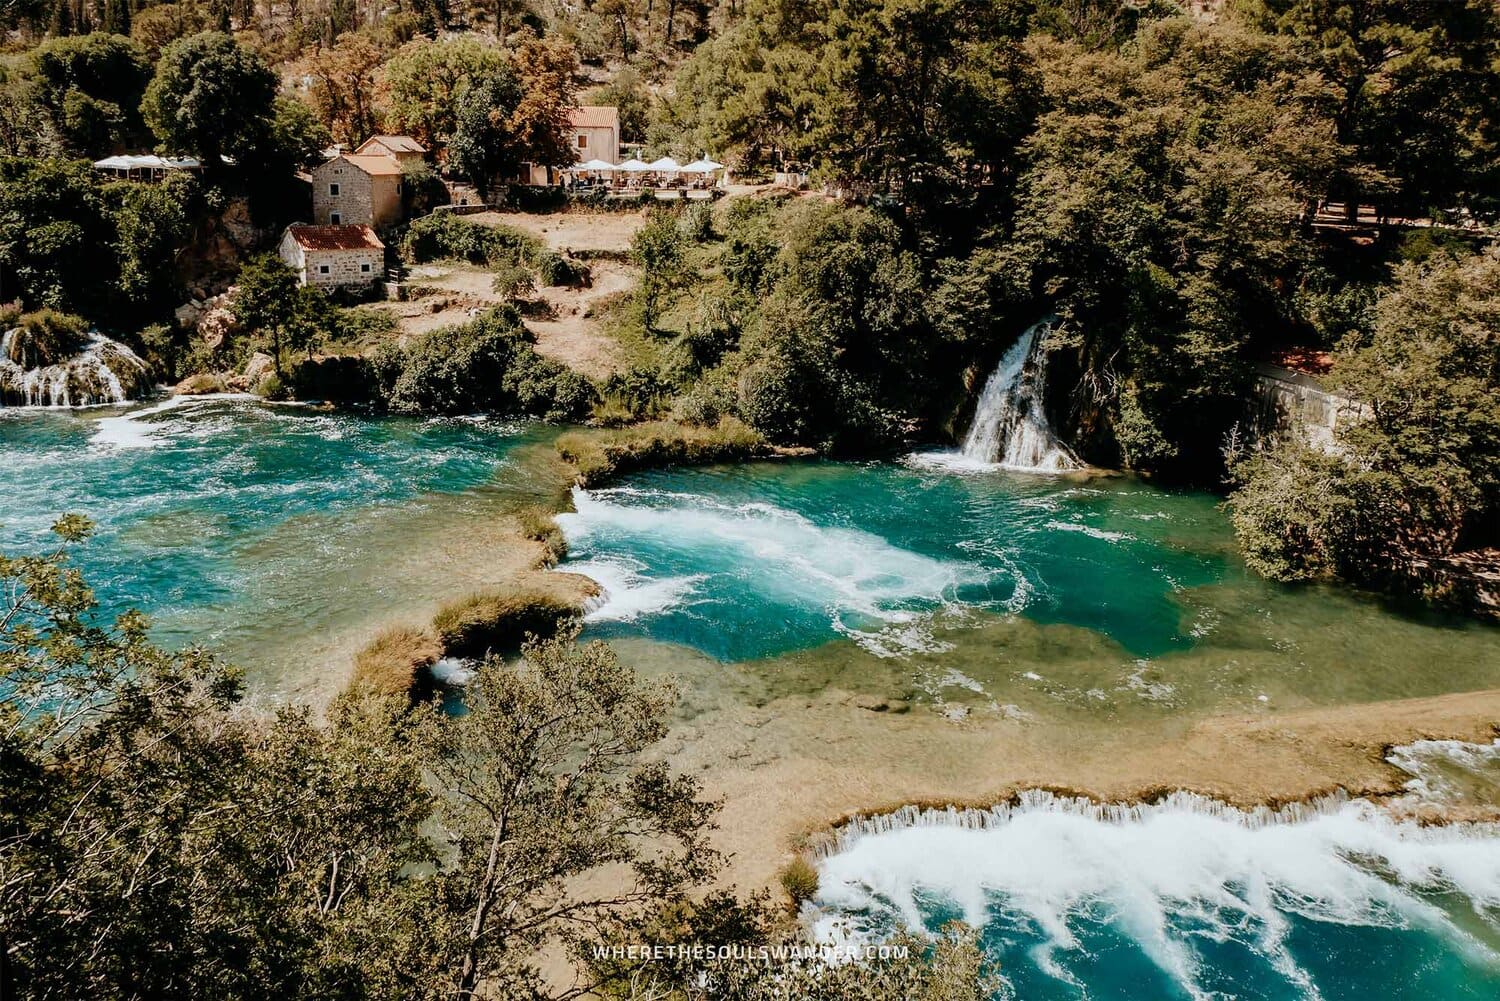 A traveller's guide to Krka National Park, Croatia (Update 2022